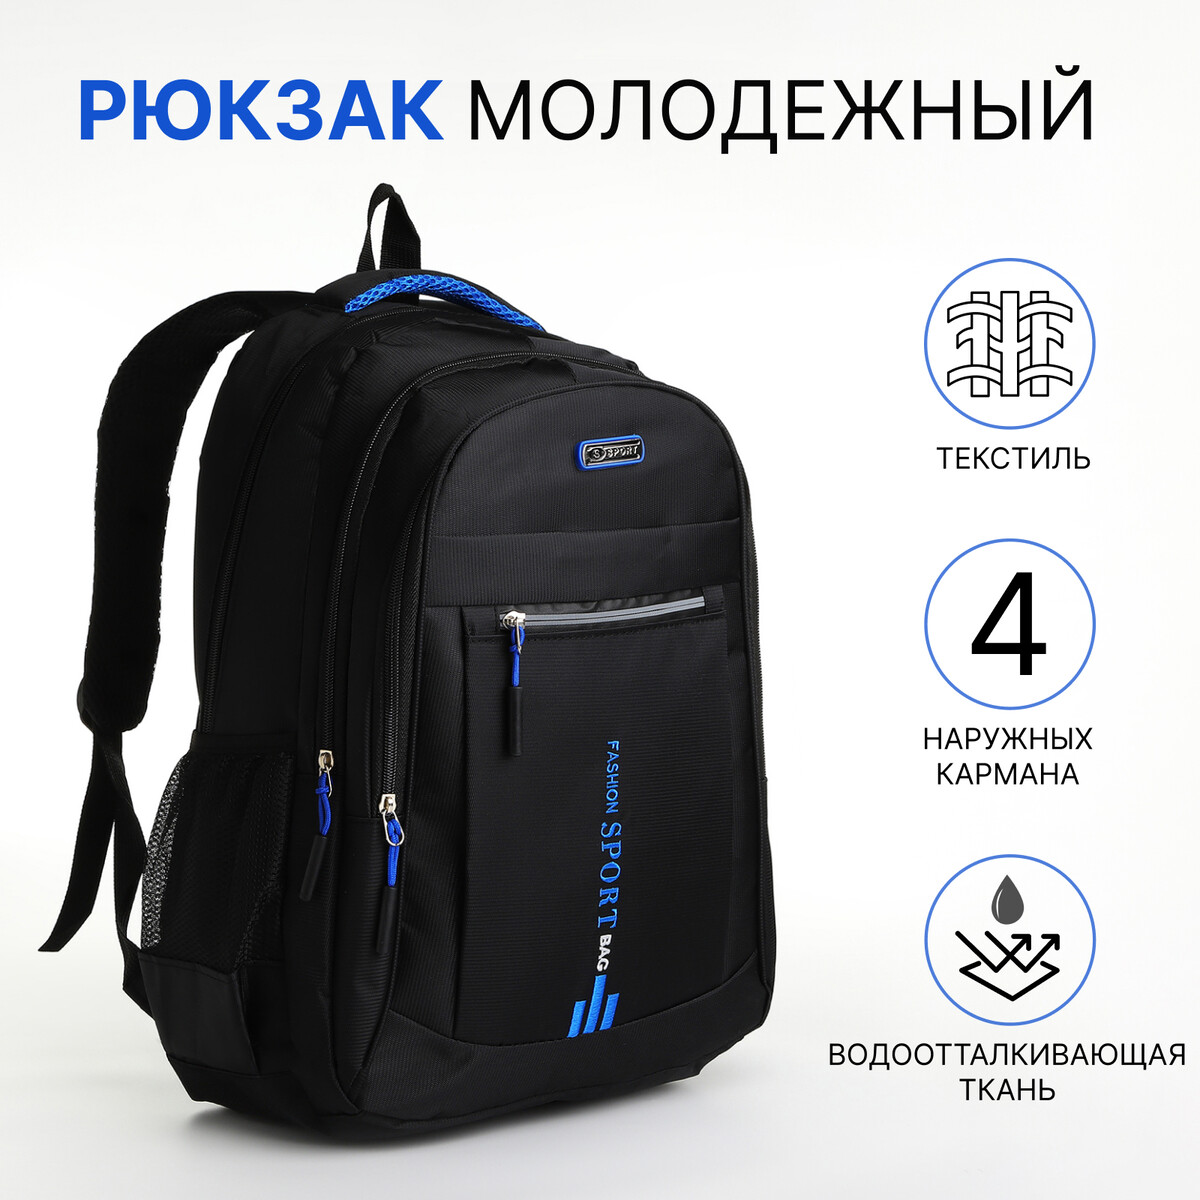 Рюкзак молодежный из текстиля на молнии, 4 кармана, цвет черный/синий рюкзак молодежный grizzly с карманом для ноутбука 15 ru 432 4 3 синий